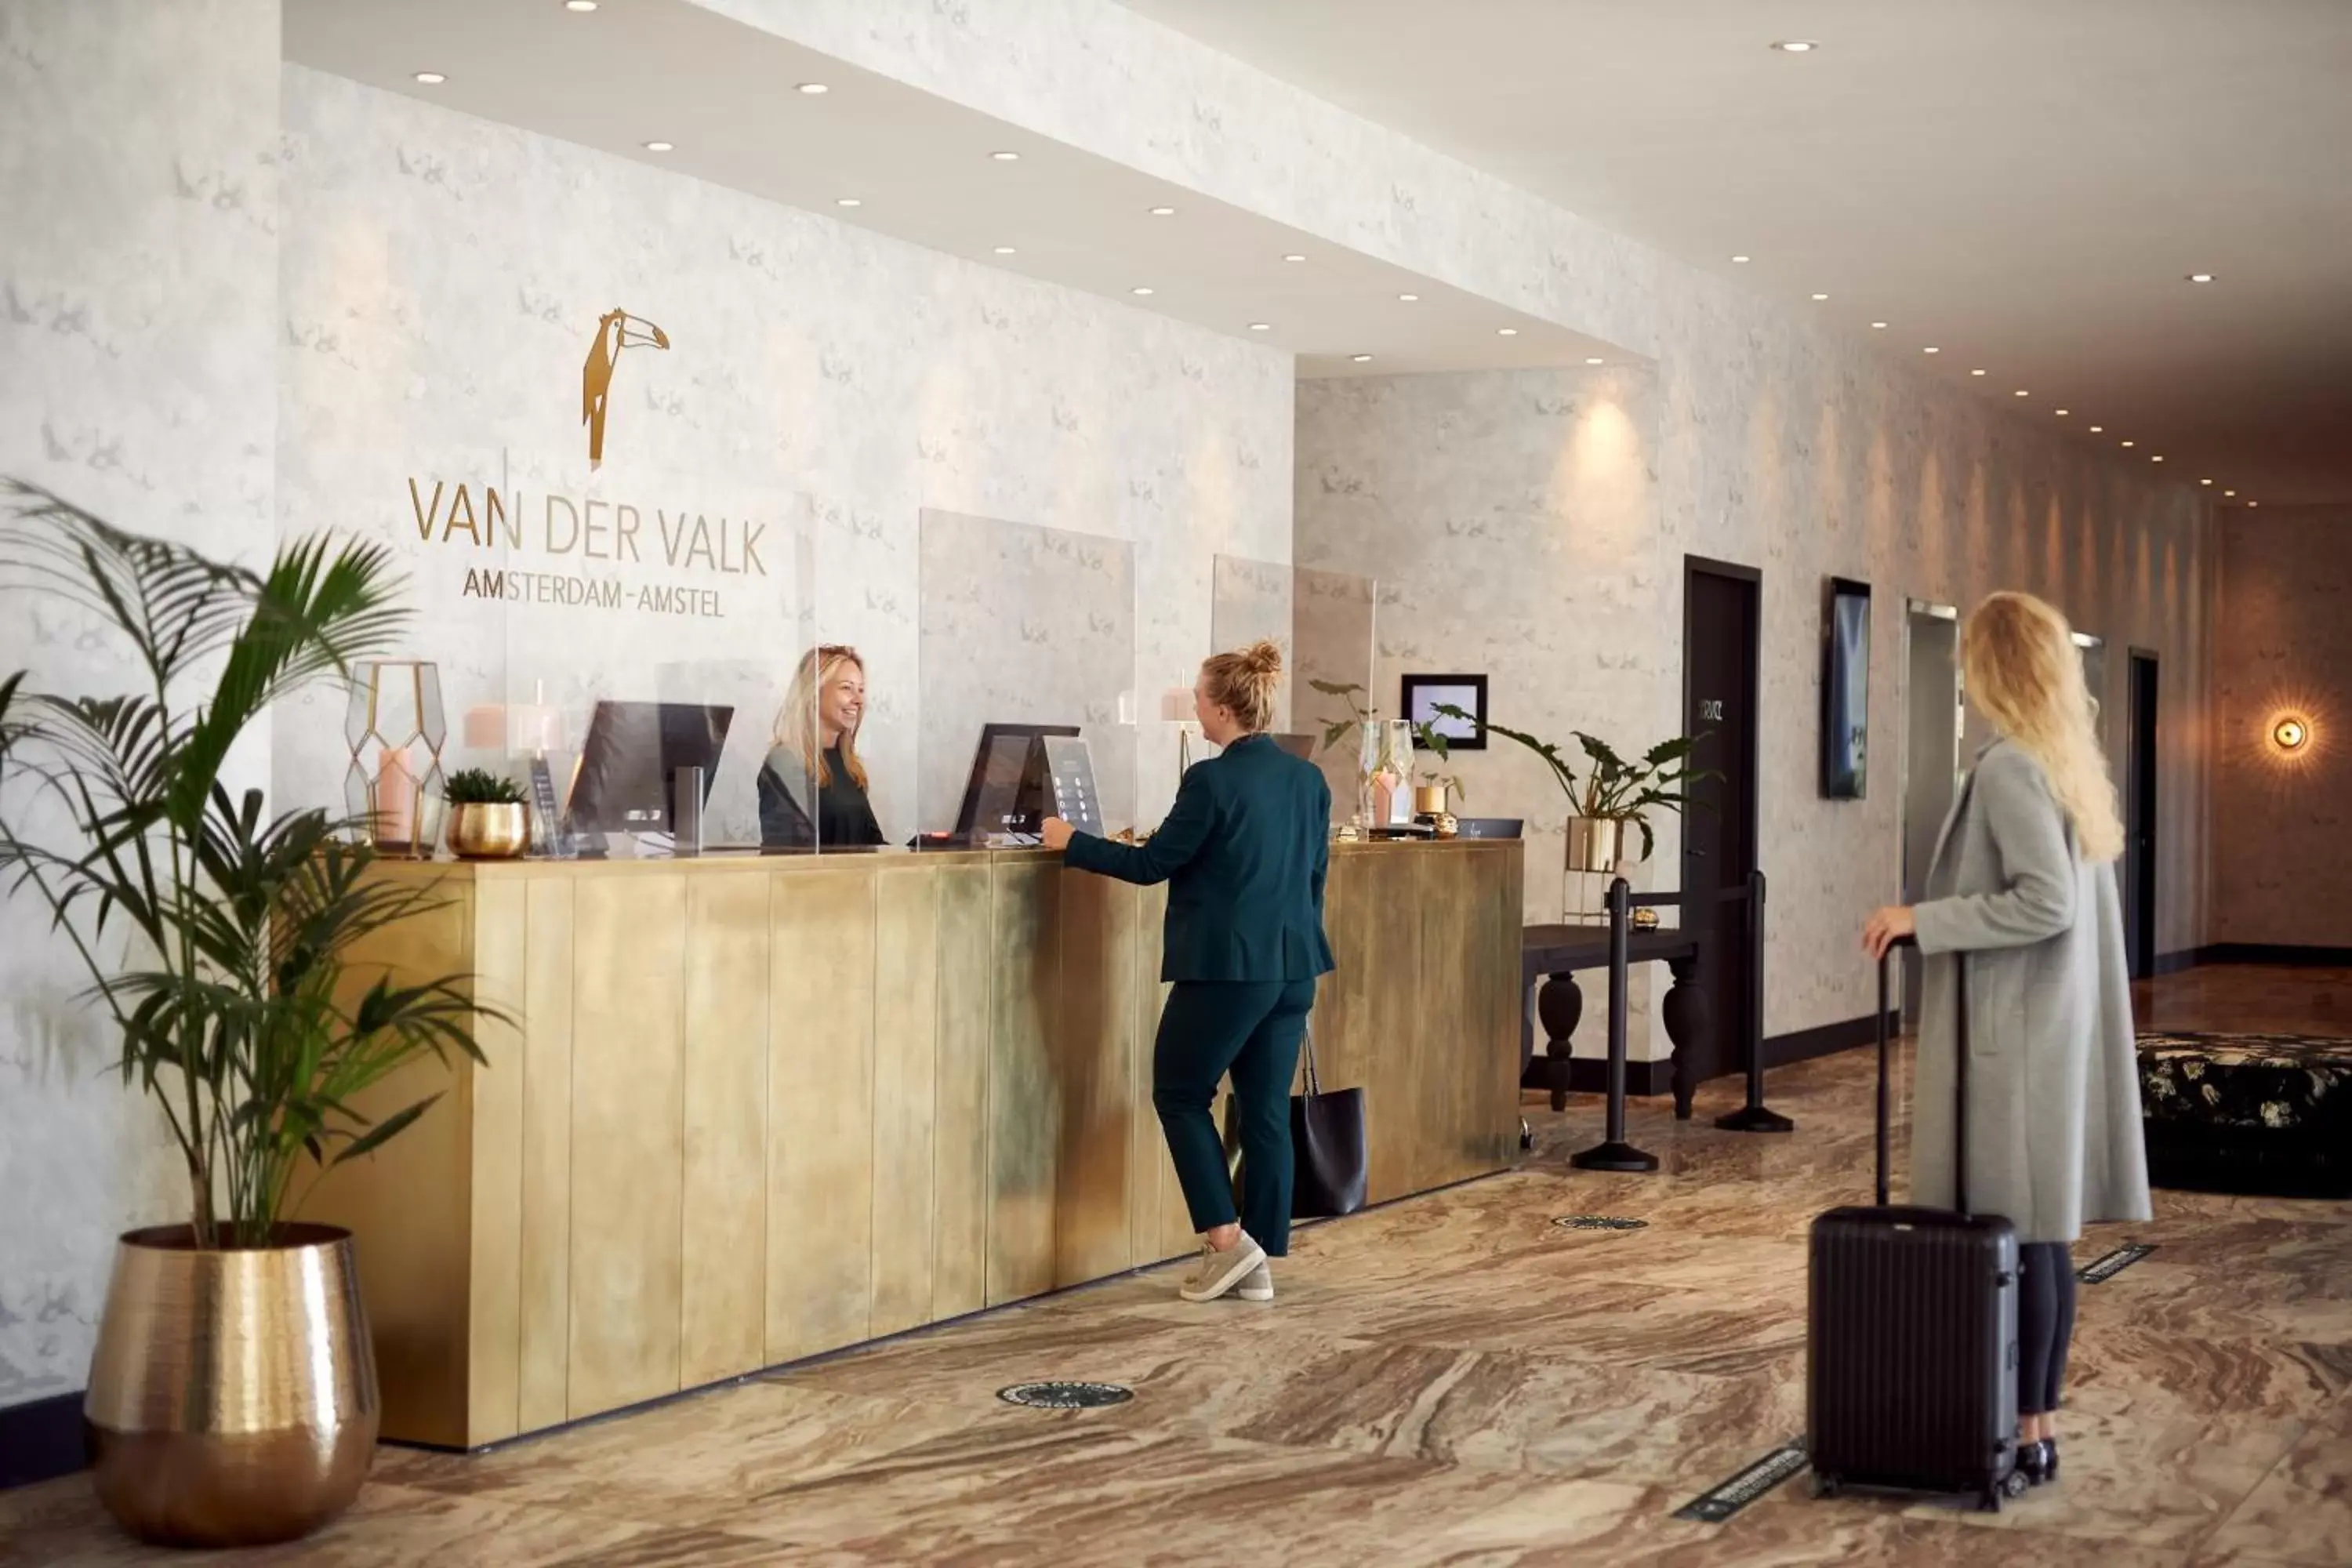 Lobby or reception in Van der Valk Hotel Amsterdam - Amstel